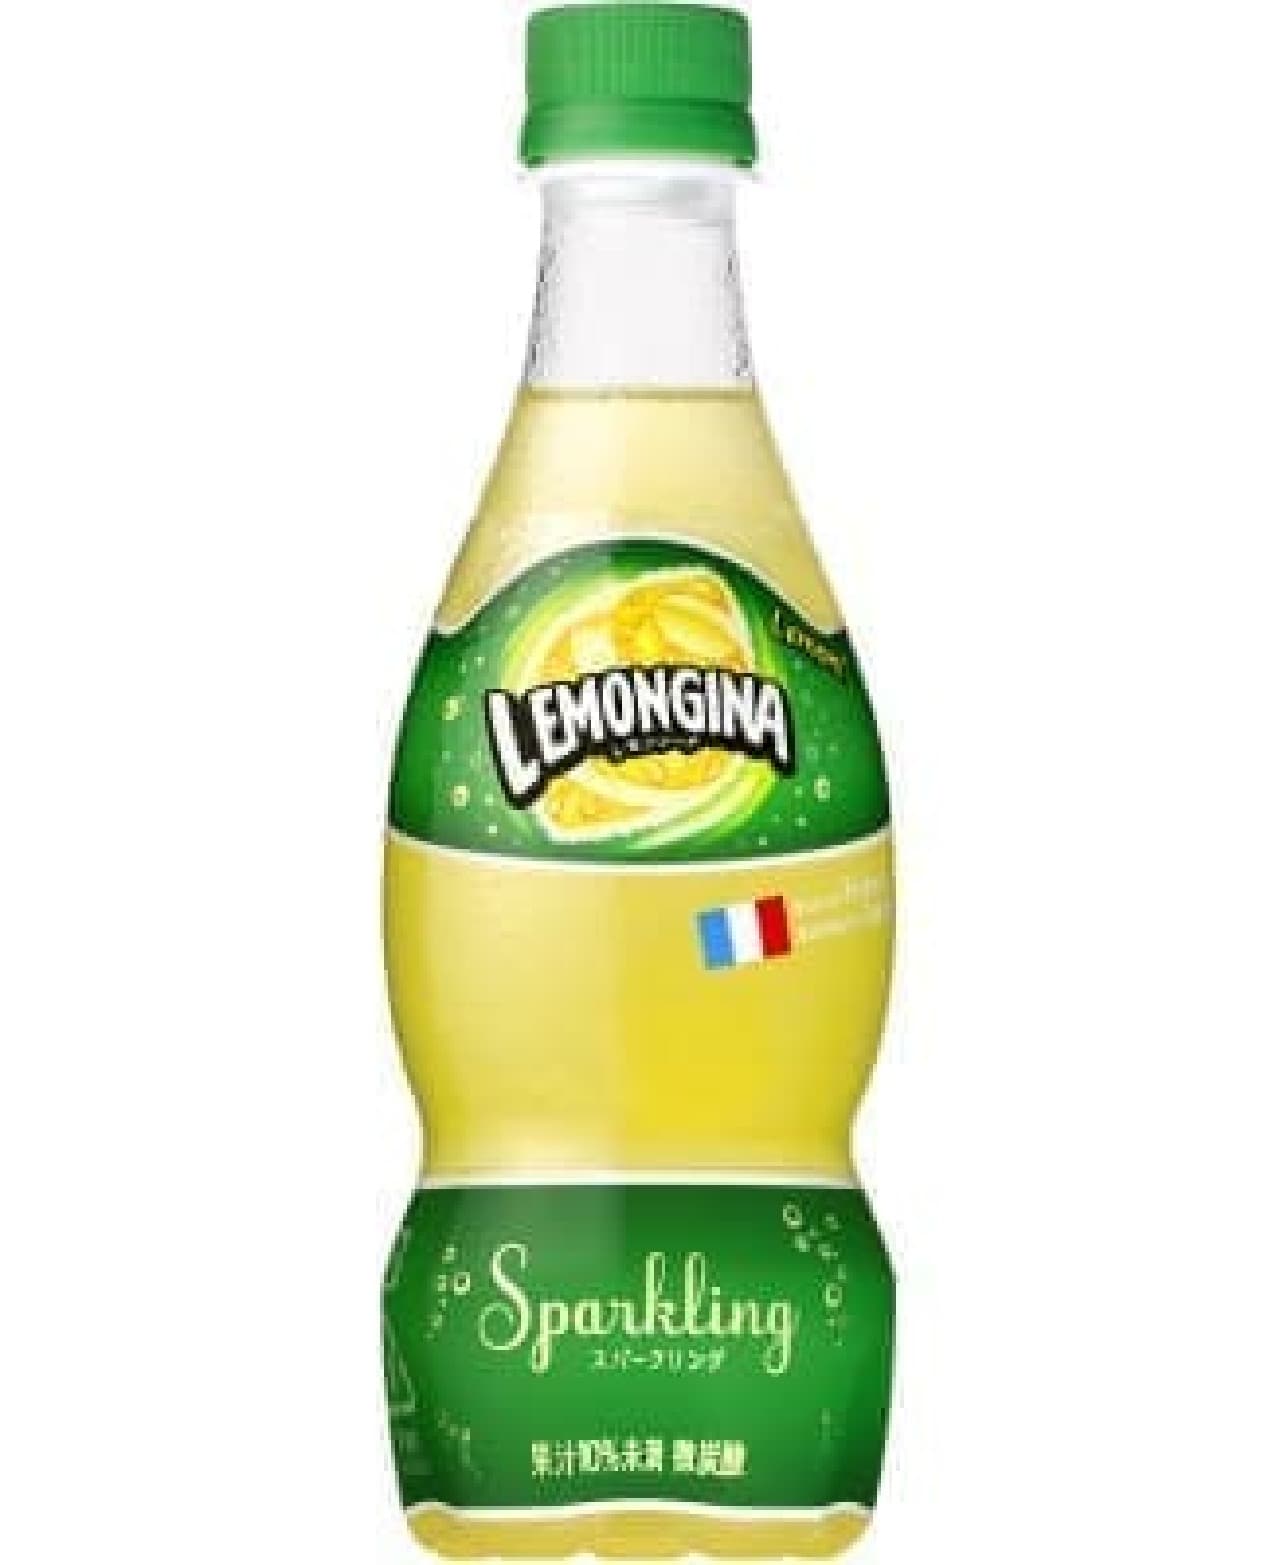 Orangina's new flavor, also known as "Lemon Gina"